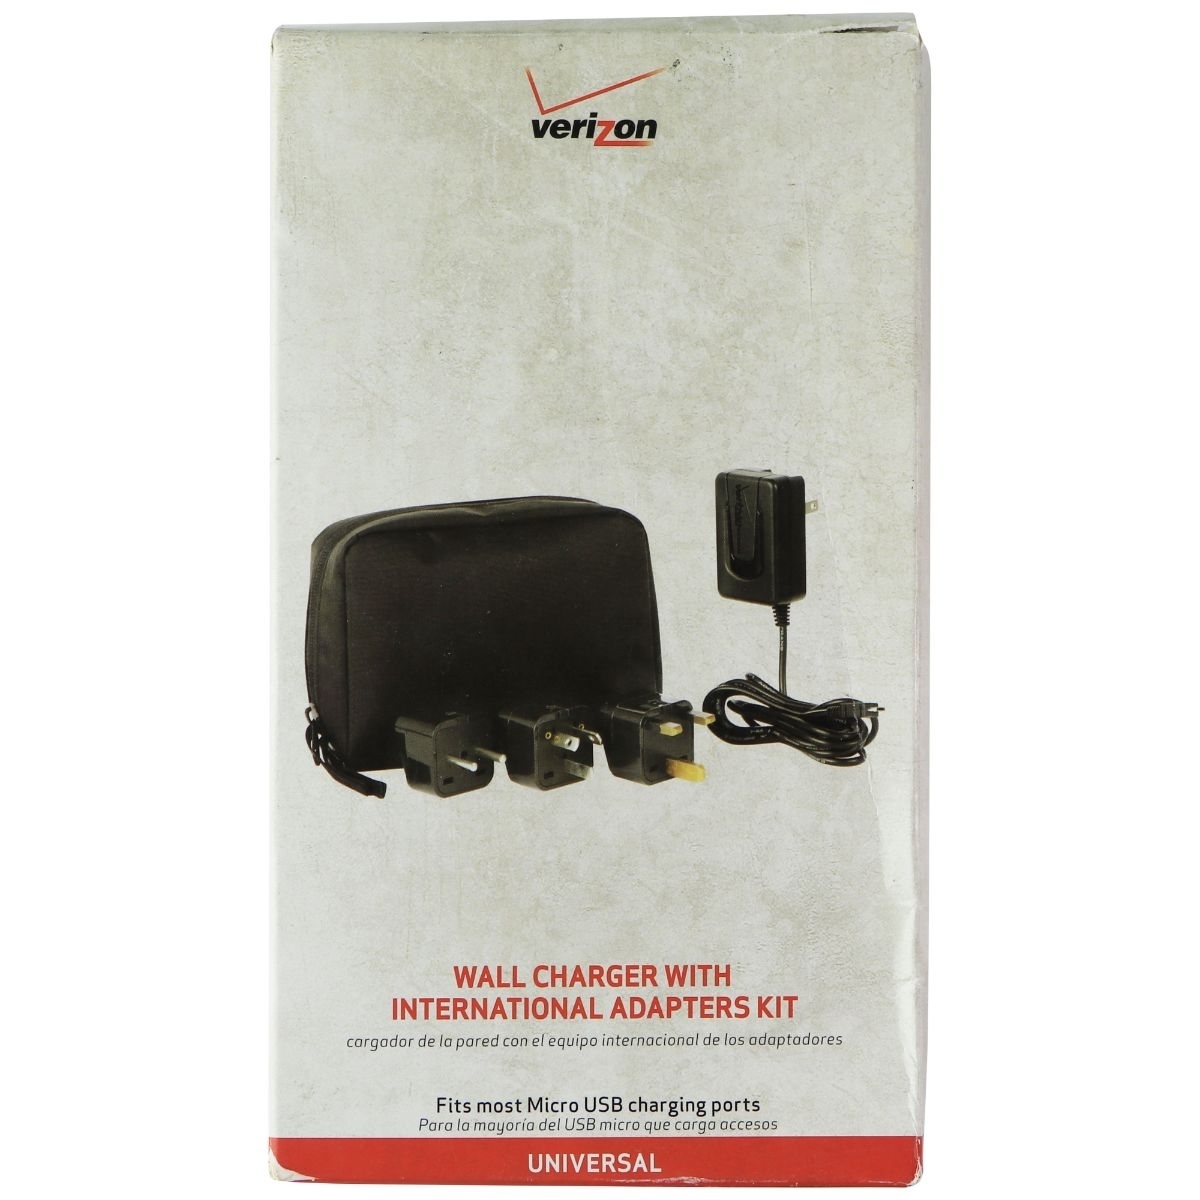 Verizon (Micro-USB) Wall Charger With International Adapters Kit - Black (Refurbished)